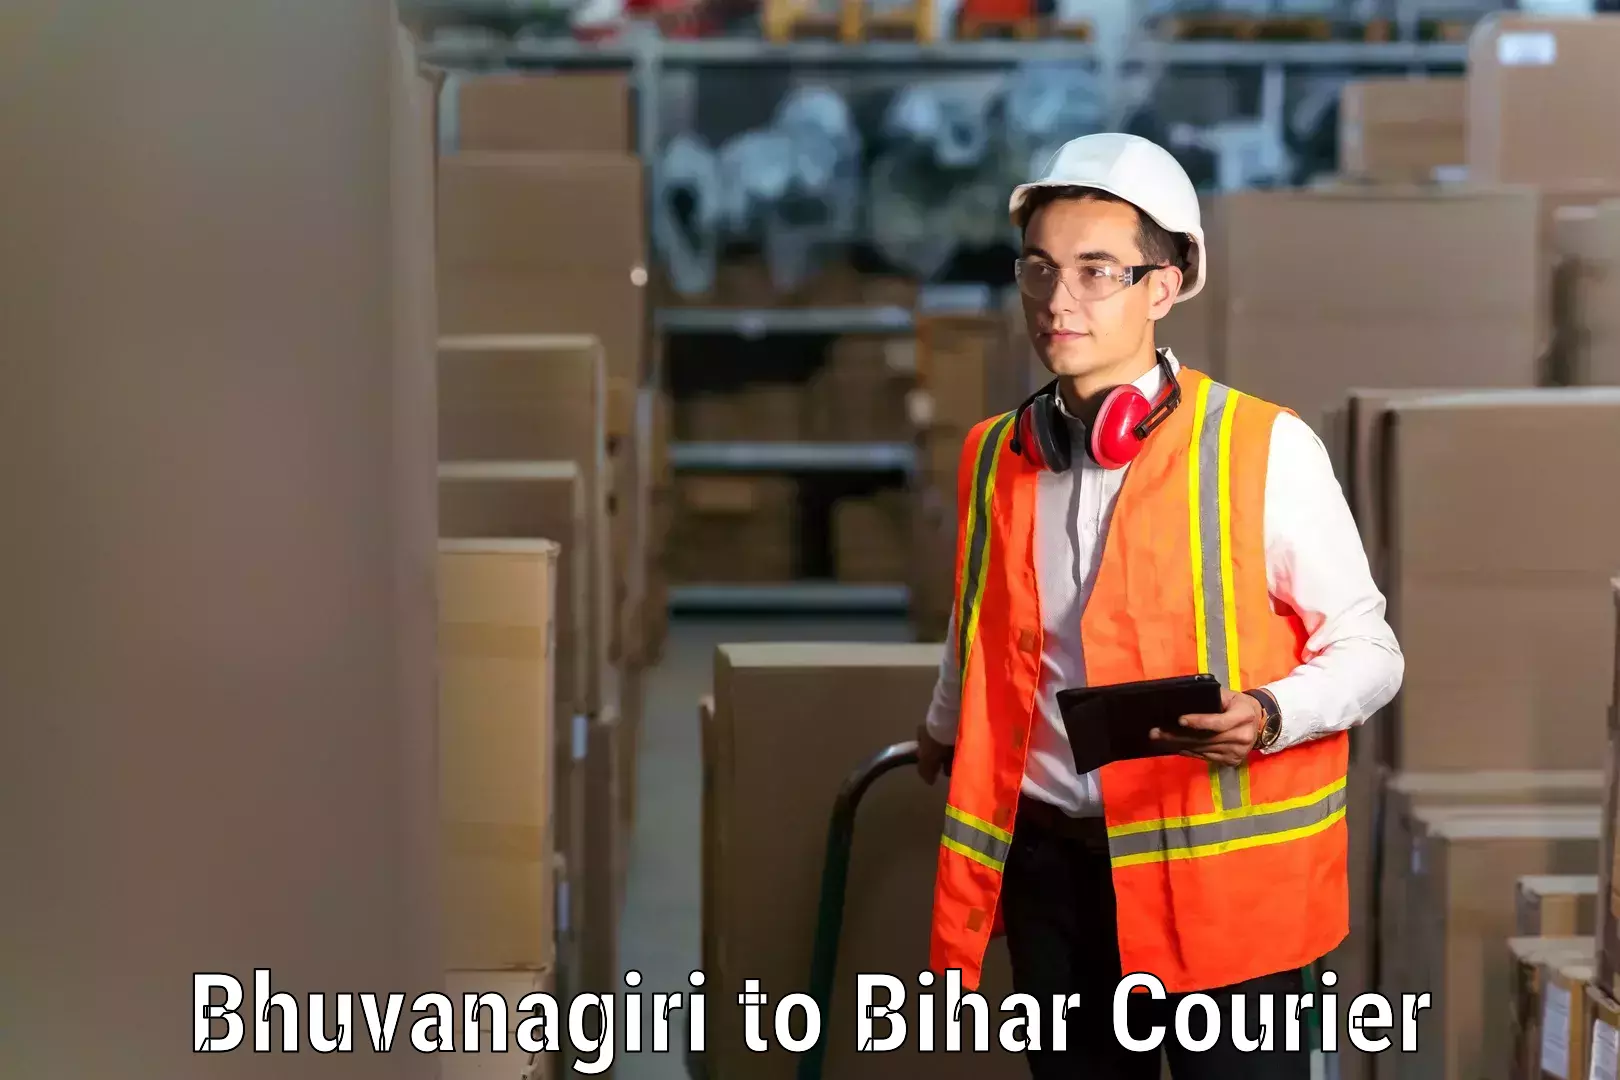 Professional moving company Bhuvanagiri to Murliganj